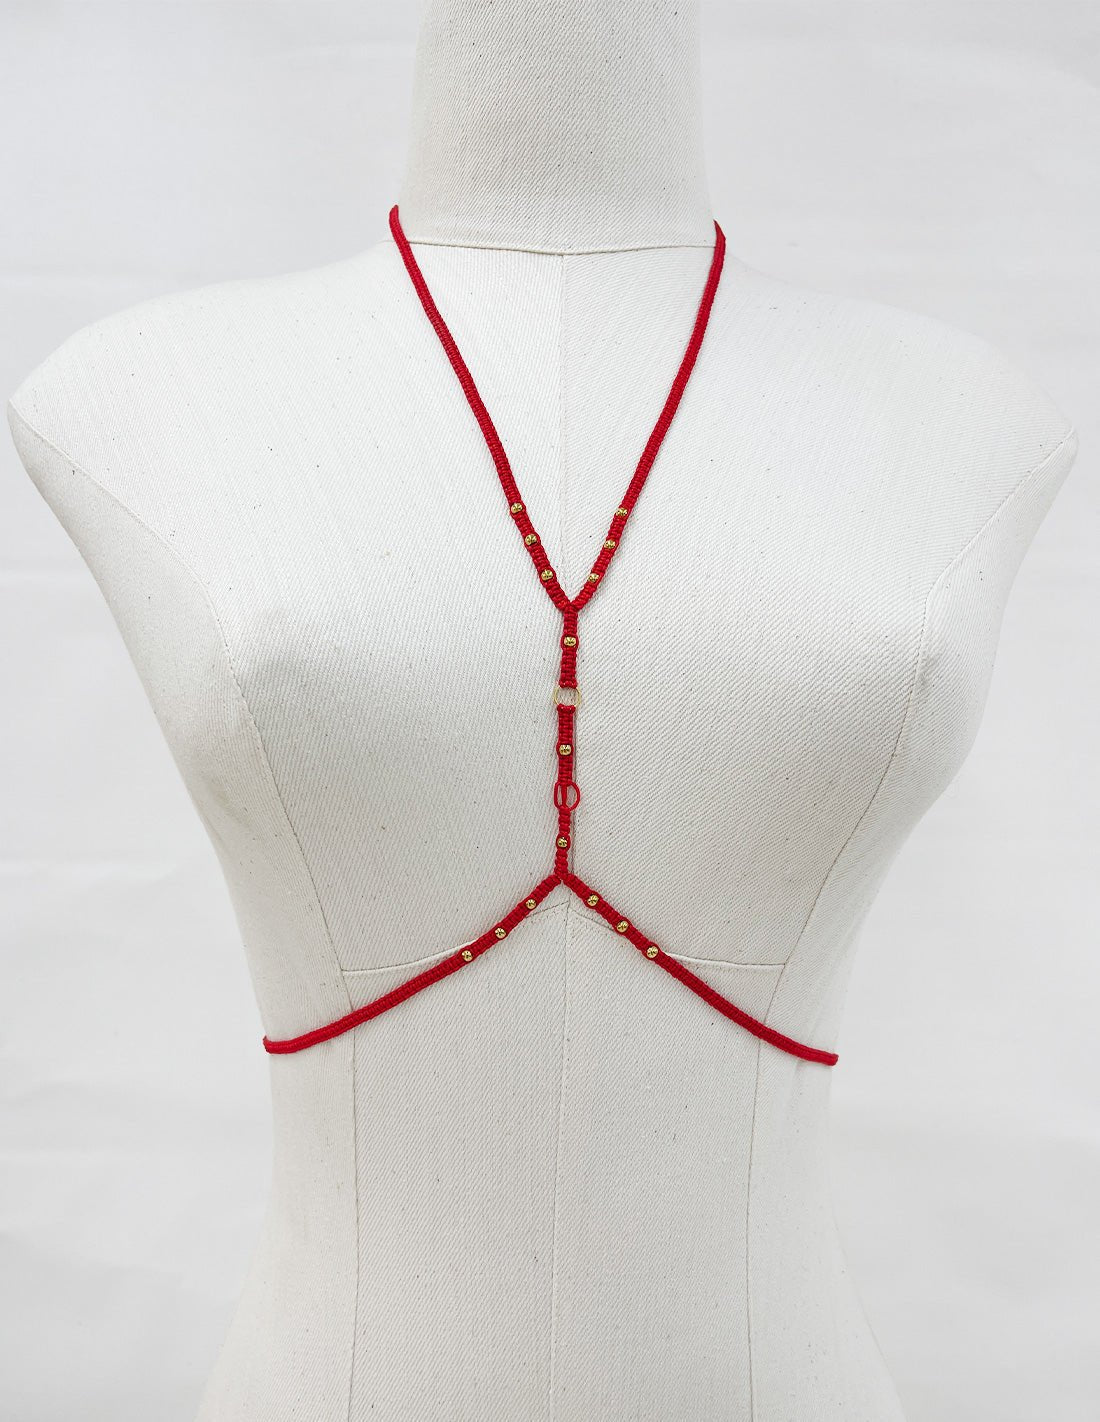 Sentellas Body Chain Red - Body Chain - Entreaguas Wearable Art